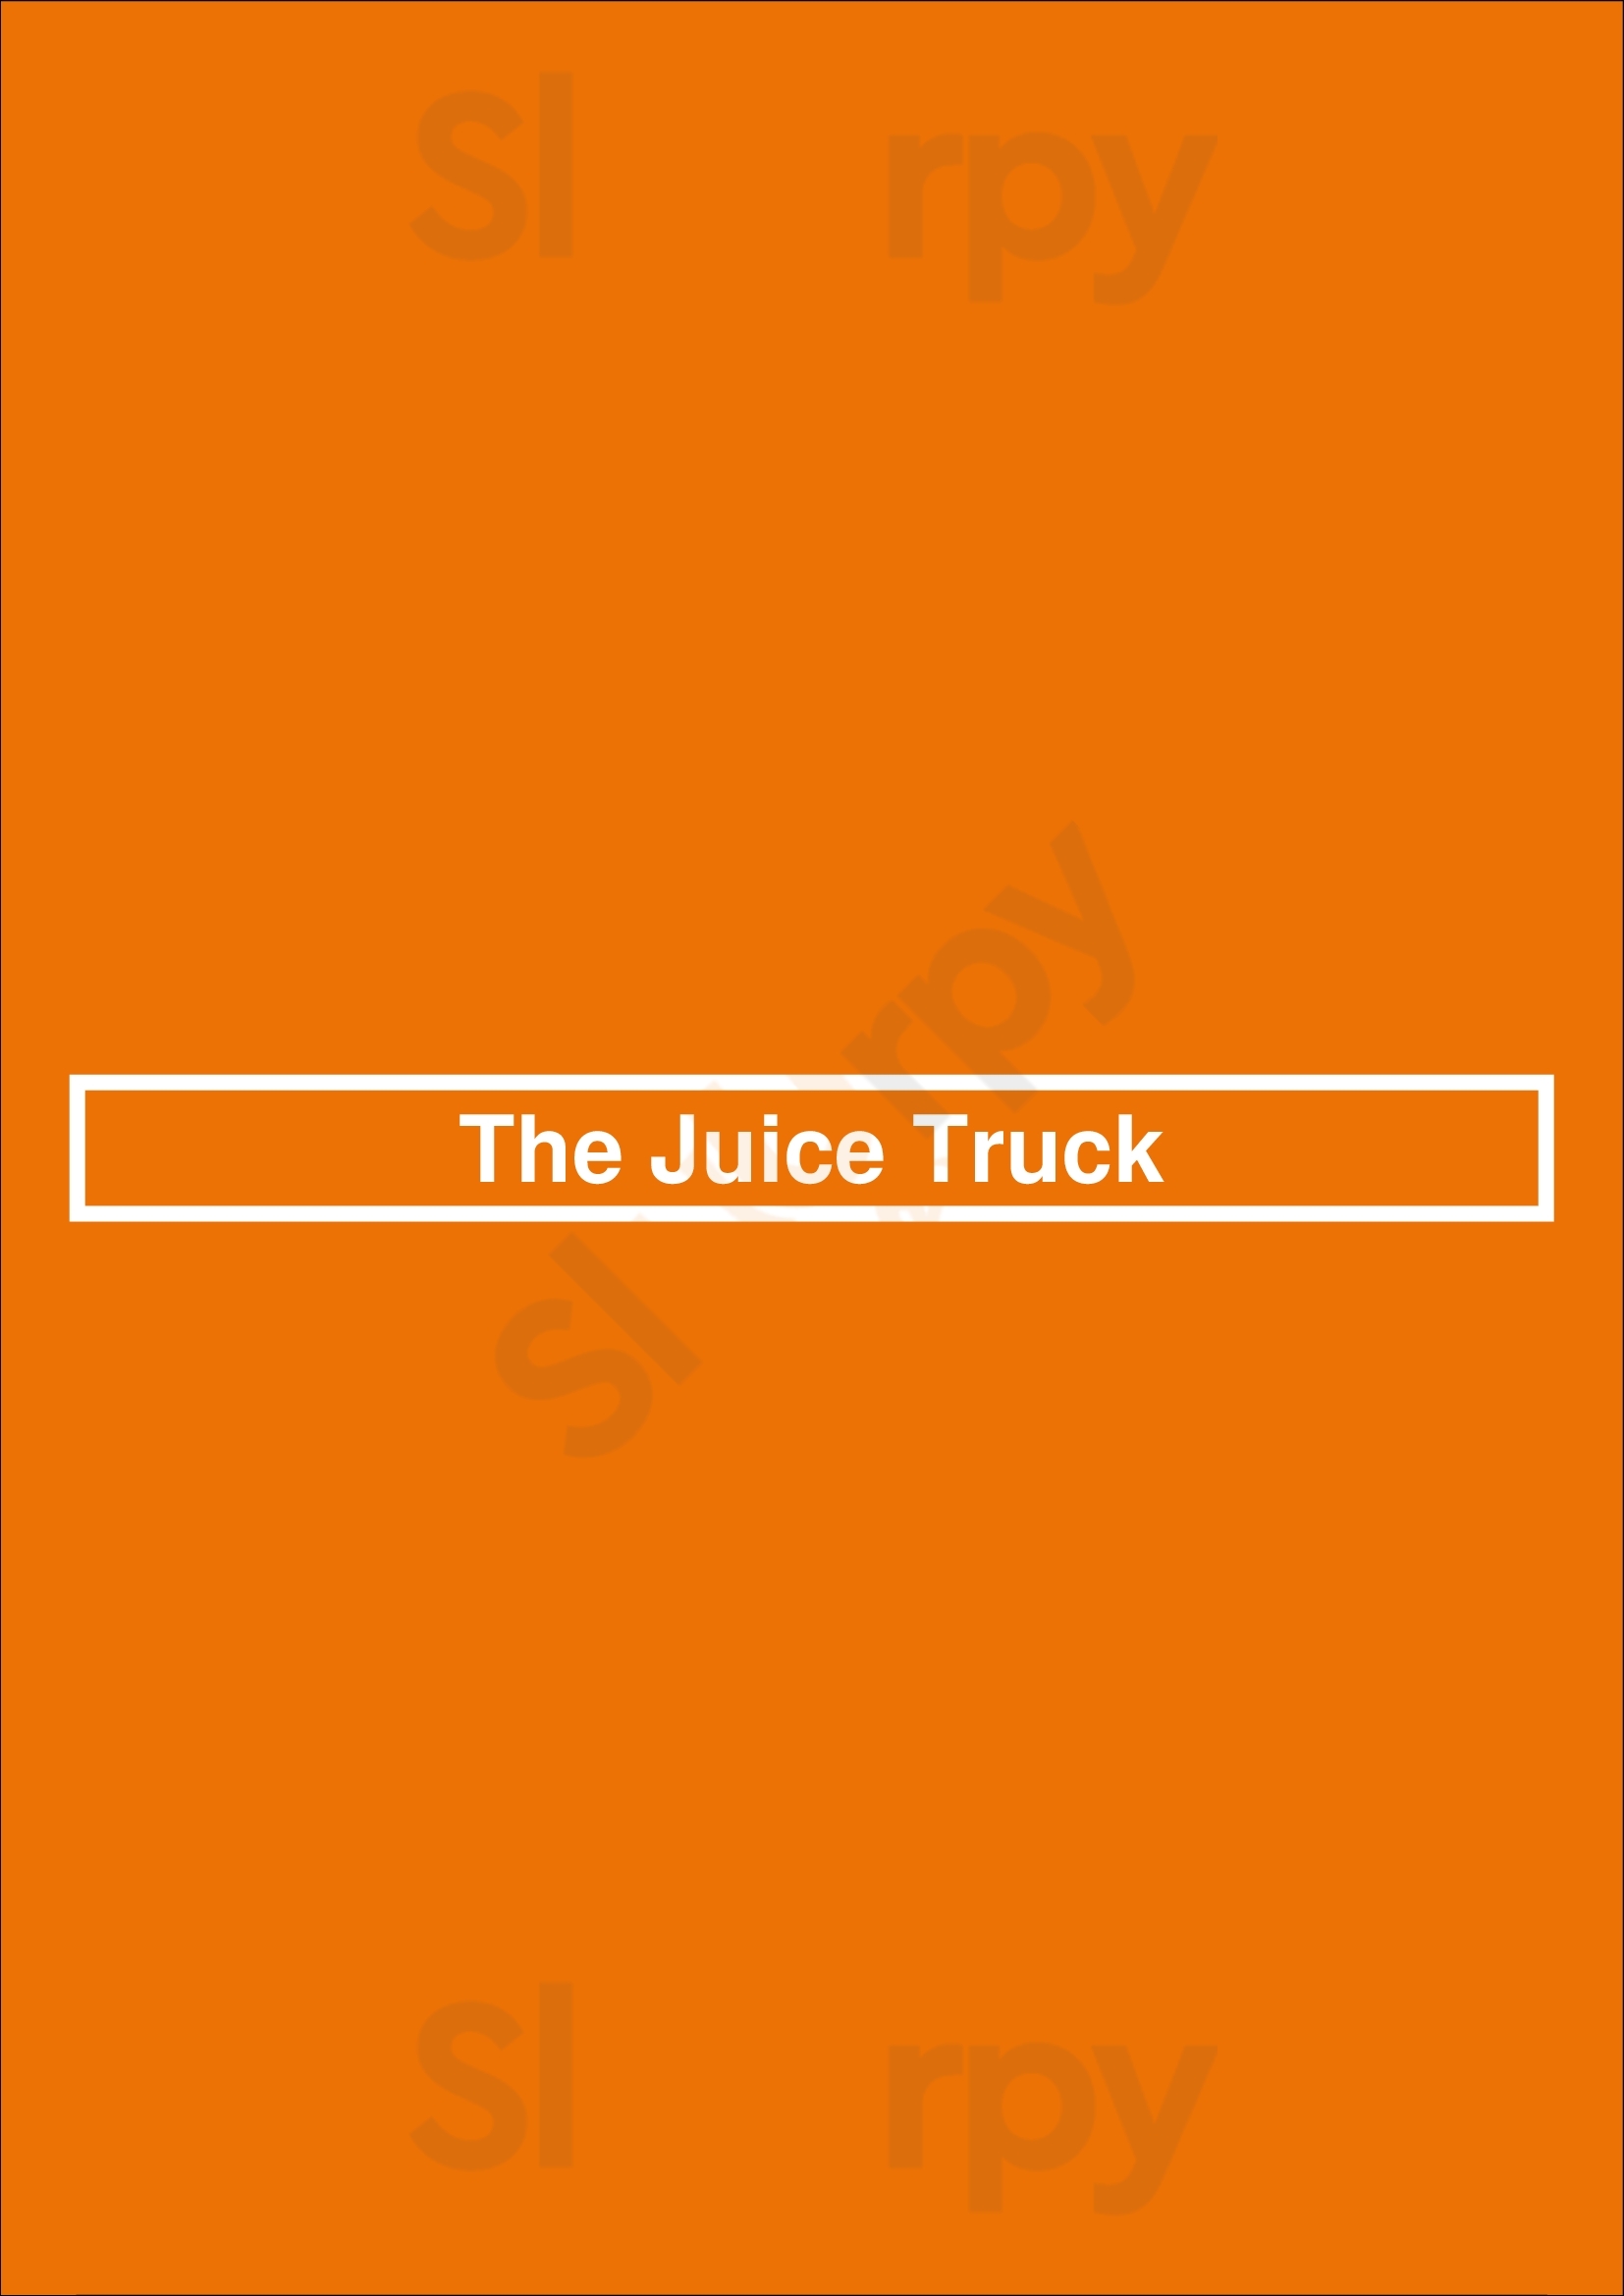 The Juice Truck Vancouver Menu - 1